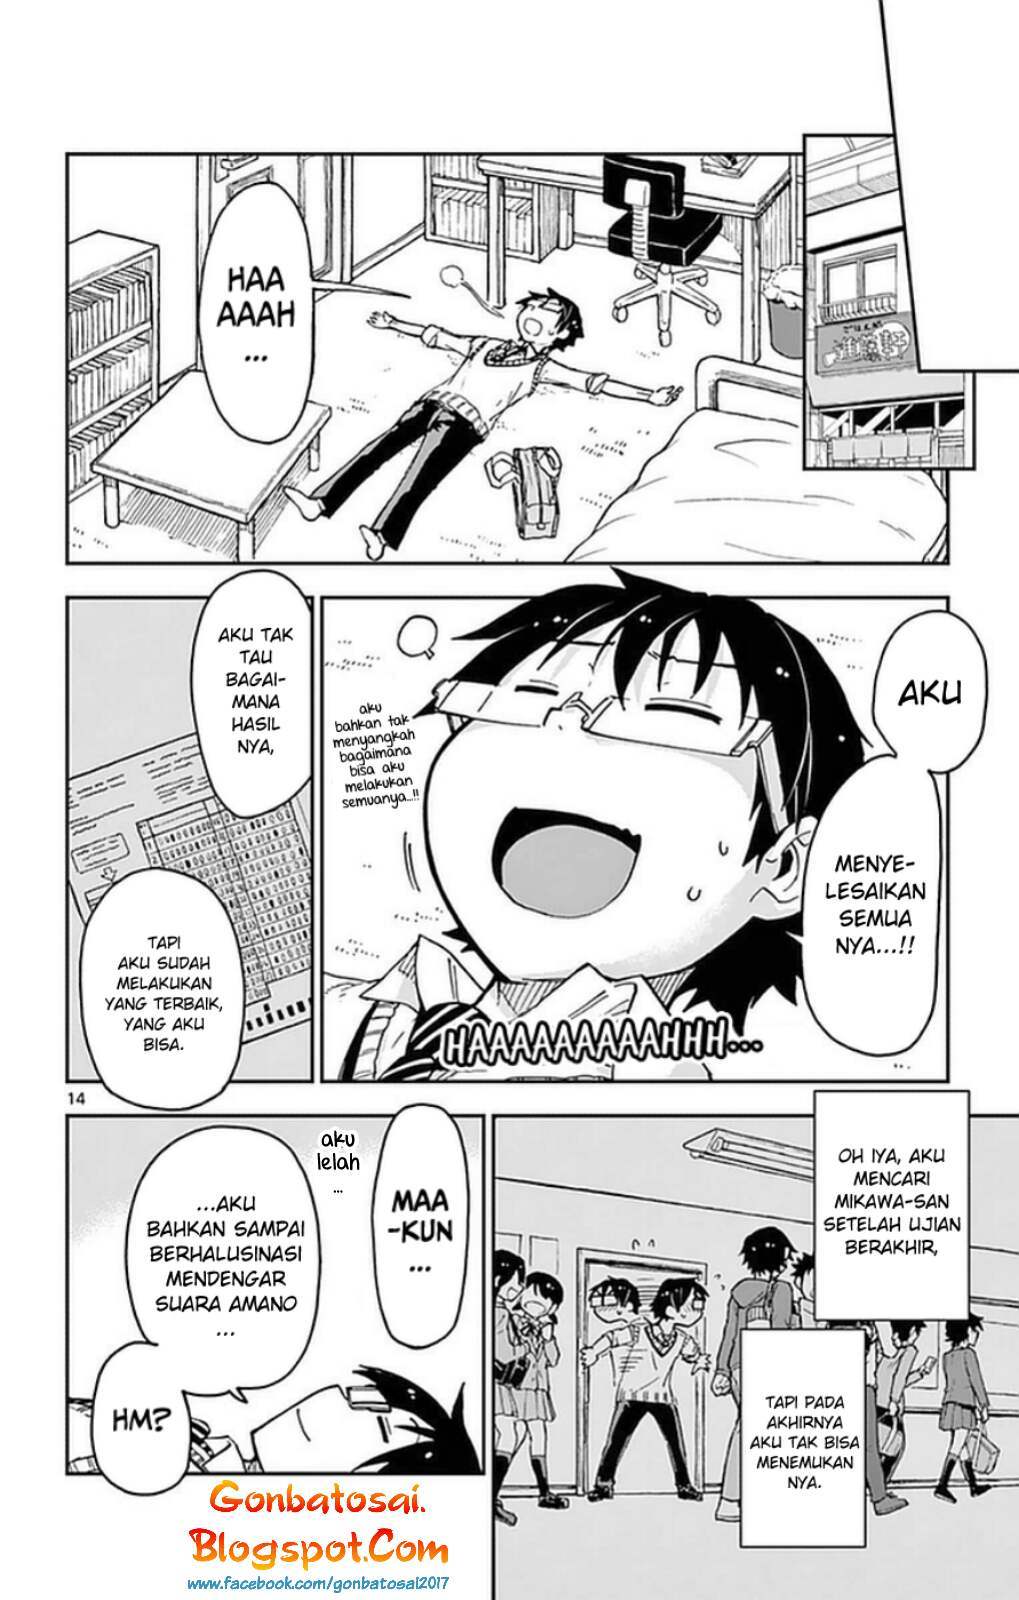 Amano Megumi wa Sukidarake! Chapter 47